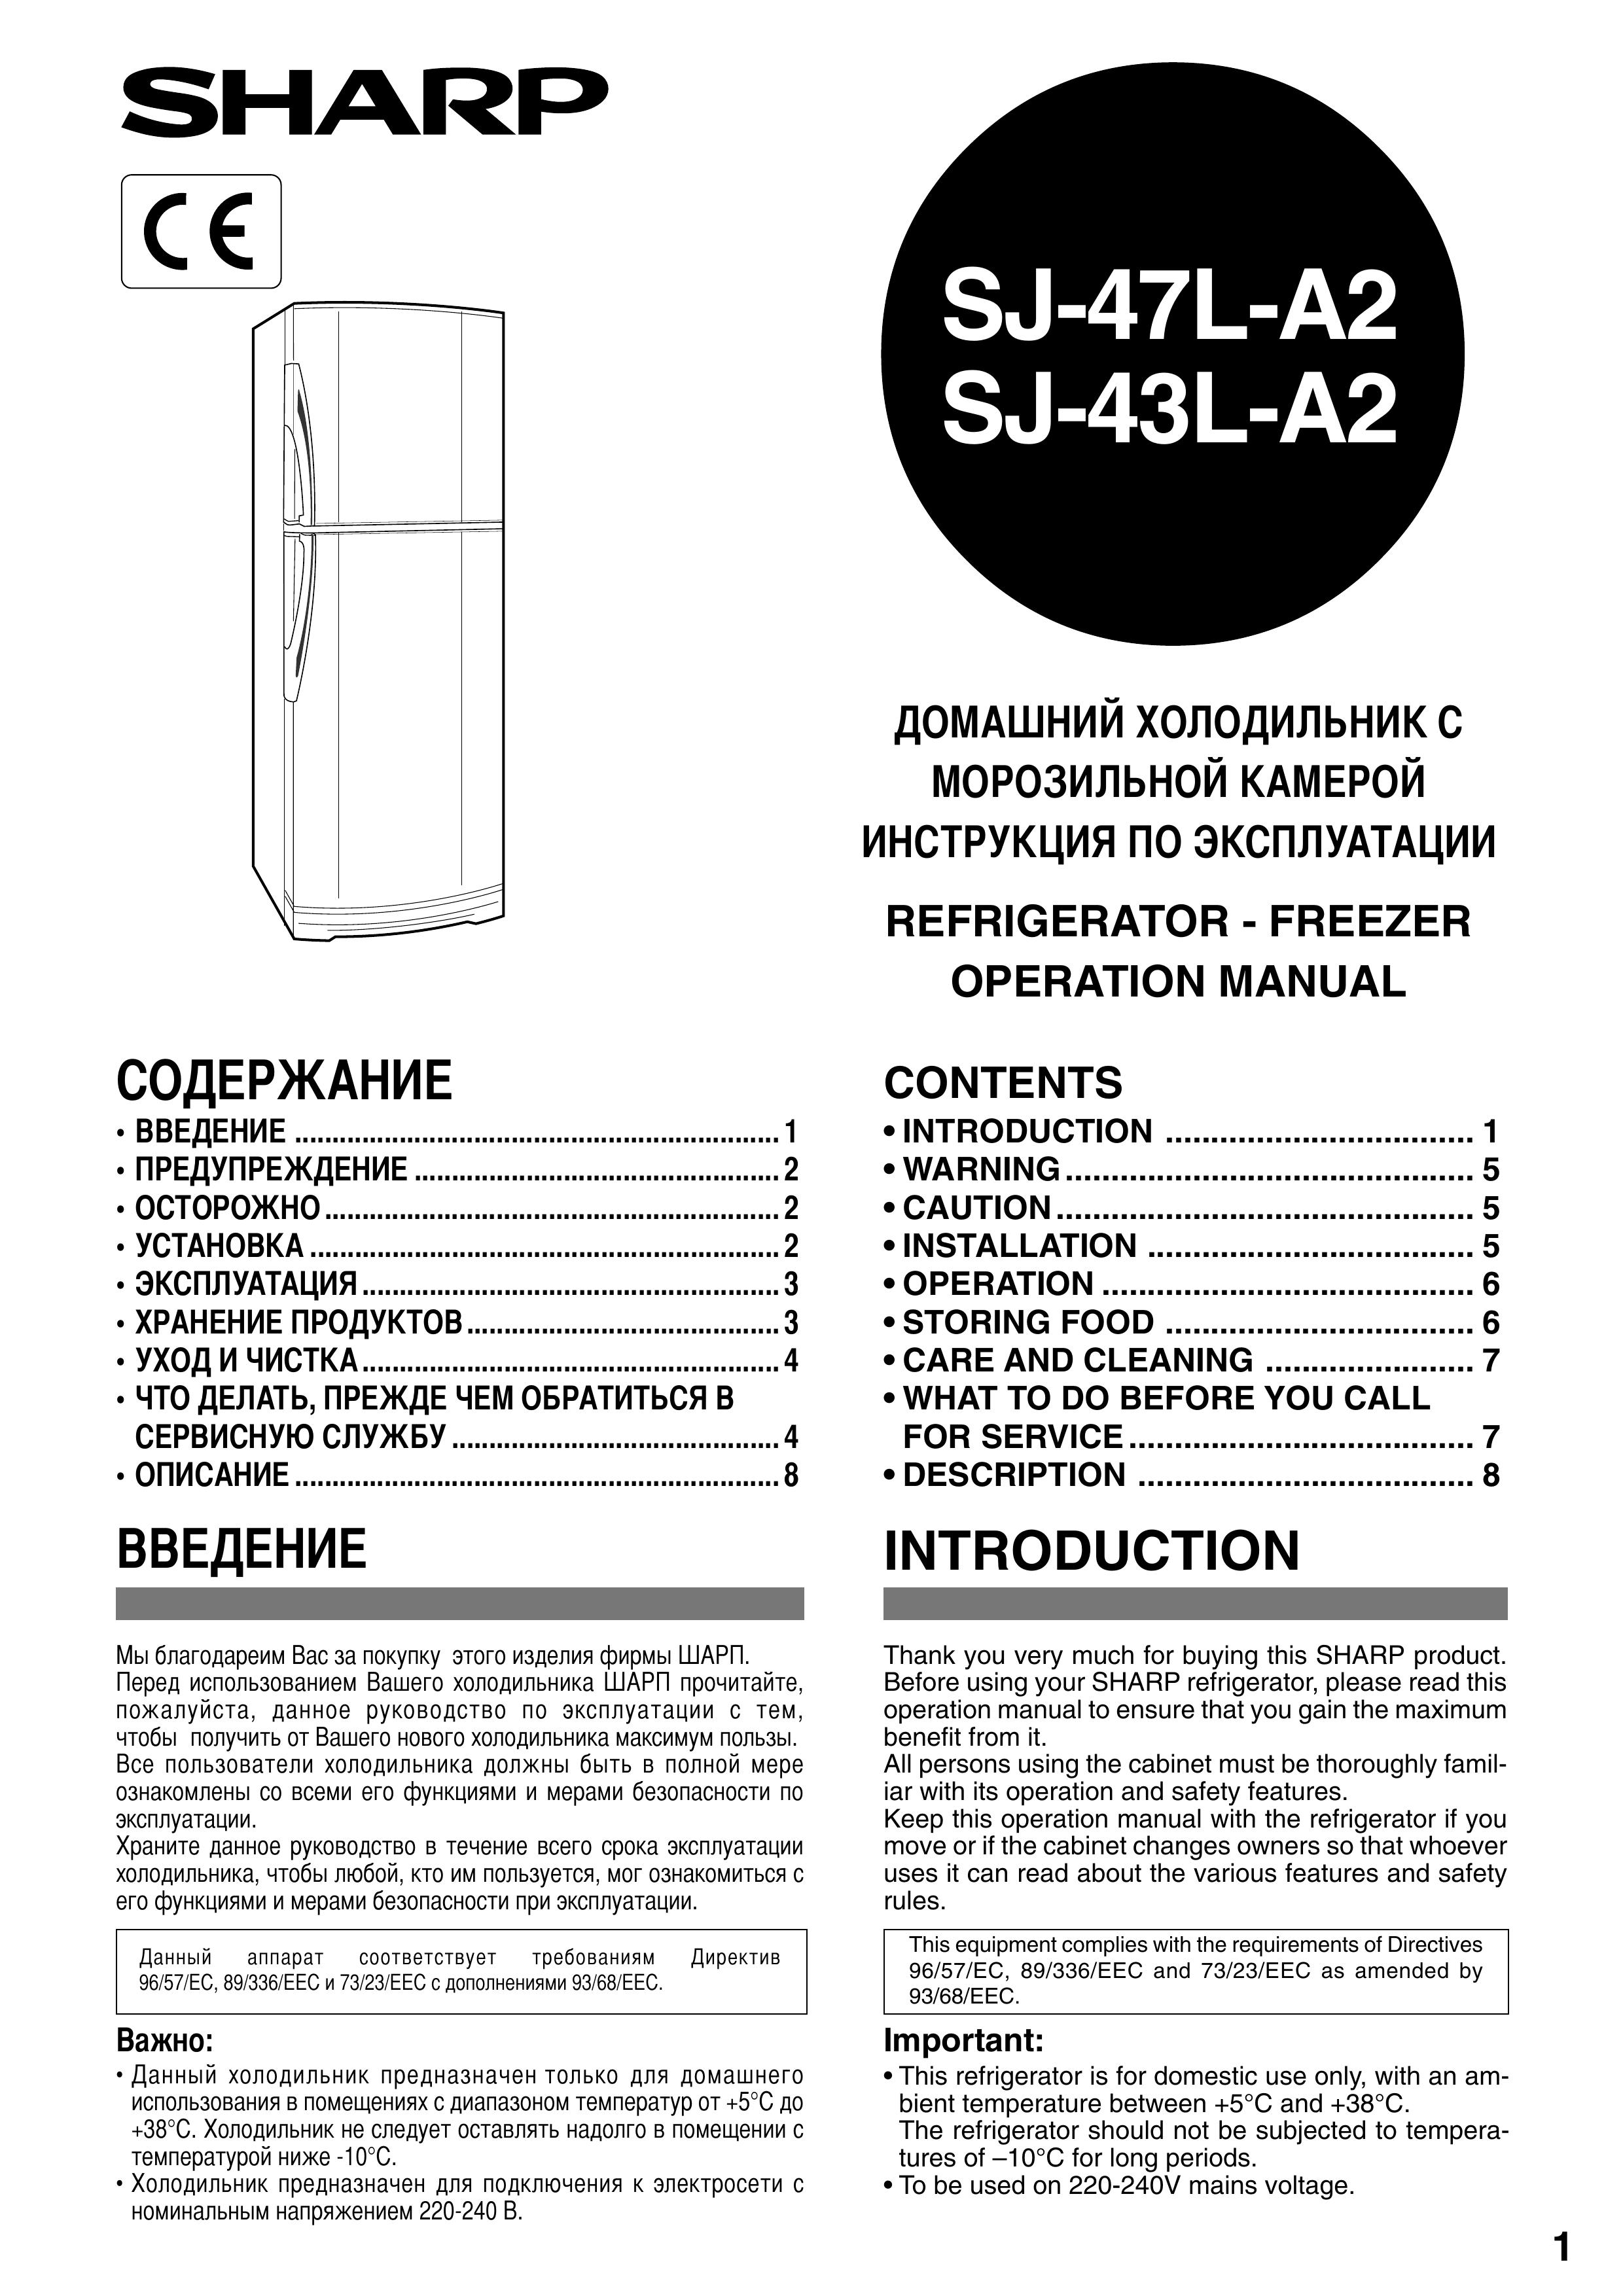 Sharp SJ-43L-A2 Refrigerator User Manual